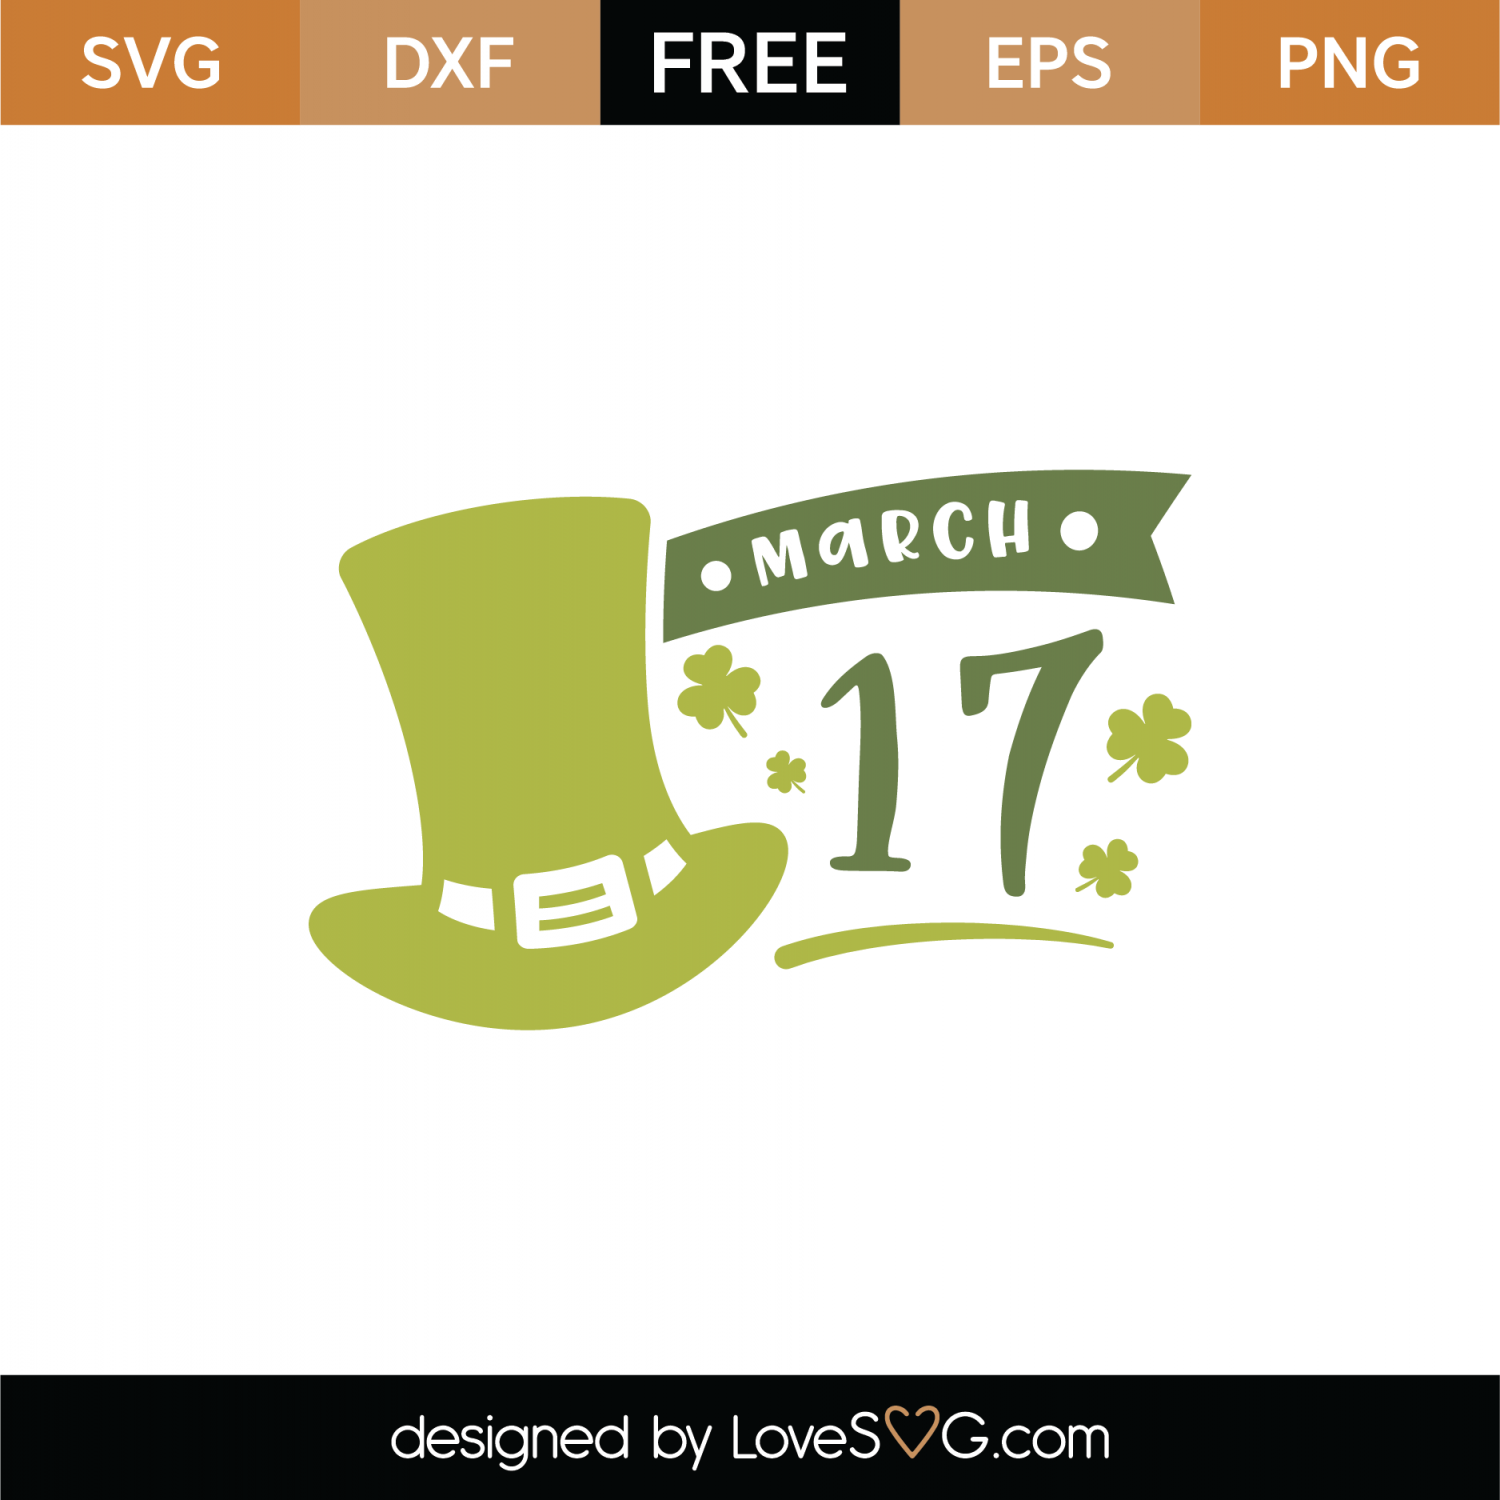 Download Free St Patrick's Day SVG Cut File | Lovesvg.com